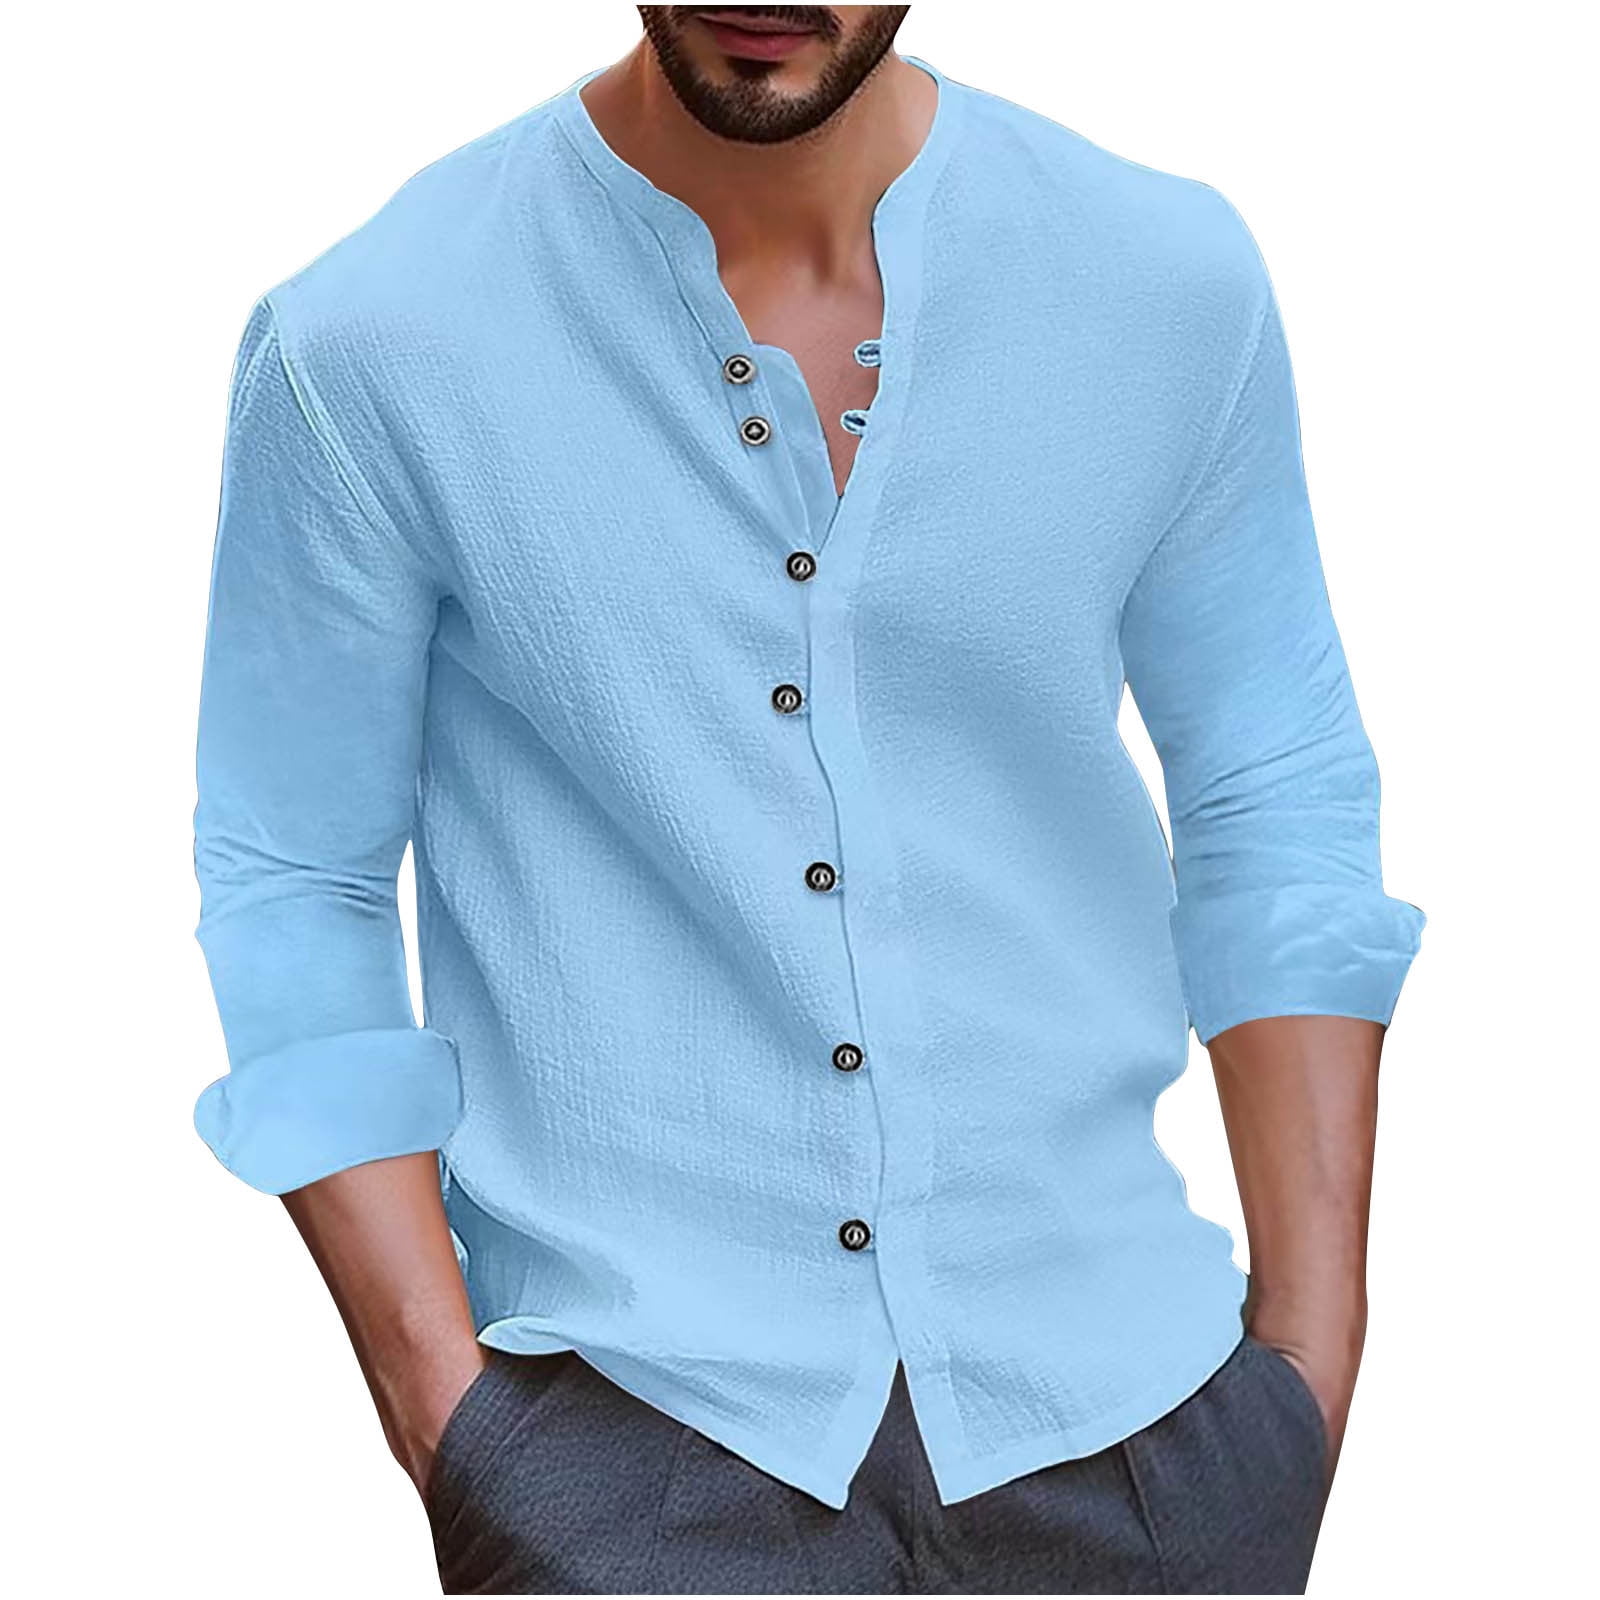 Elainilye Fashion Shirt Button Up Shirt Men Casual Solid Round Neck Button  Long Sleeve Shirt Blouse Tops,Blue 